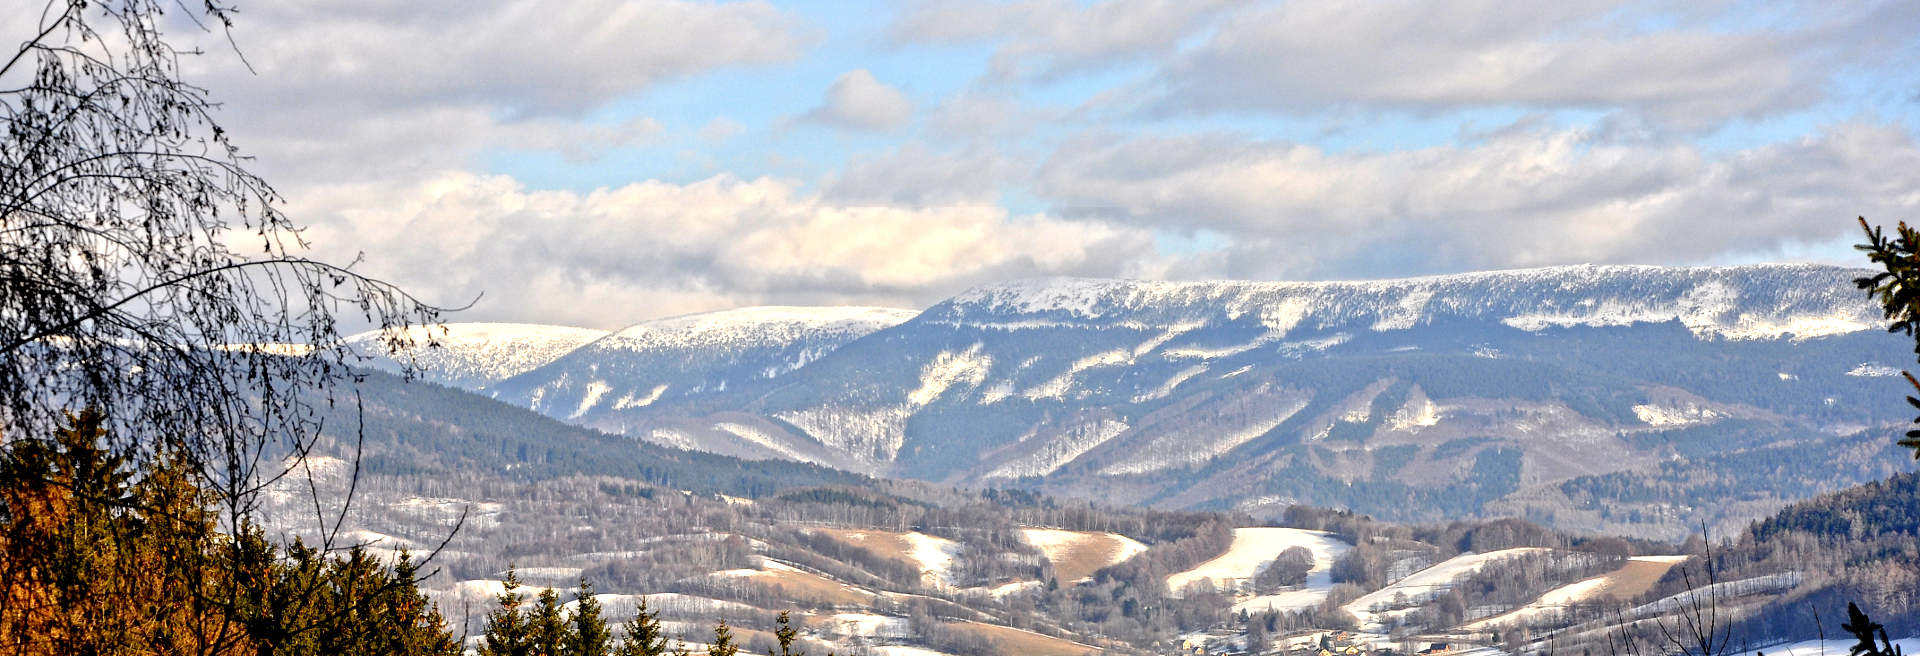 Jeseniky mountains in winter